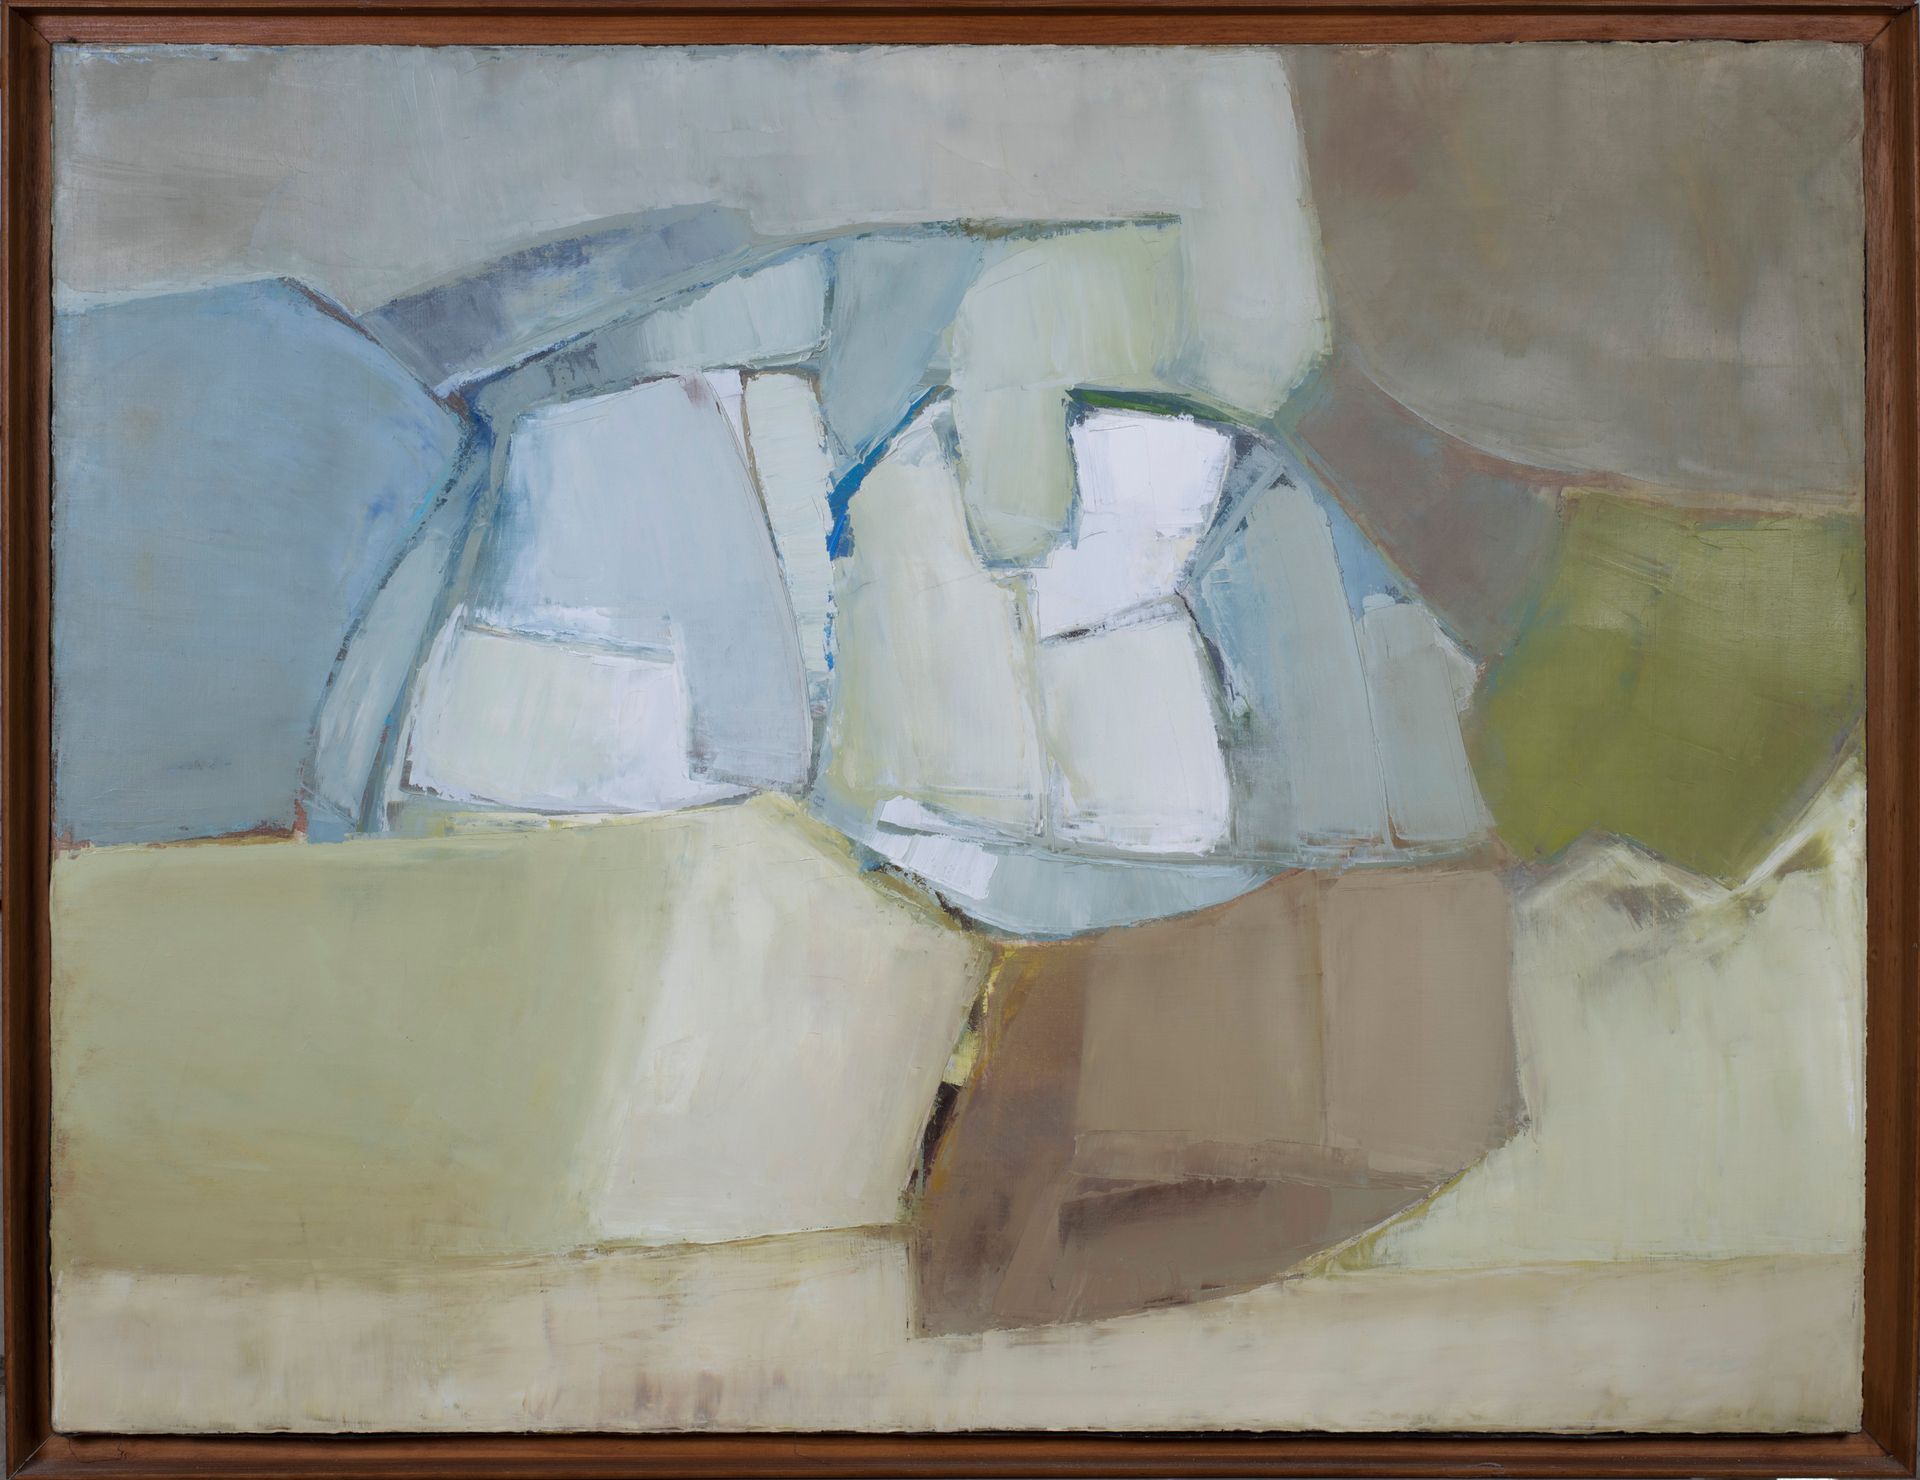 Null 米歇尔-法尔（1928-2009）。

组成，1969年。

布面油画。背面有签名和日期69。

89 x 116厘米。